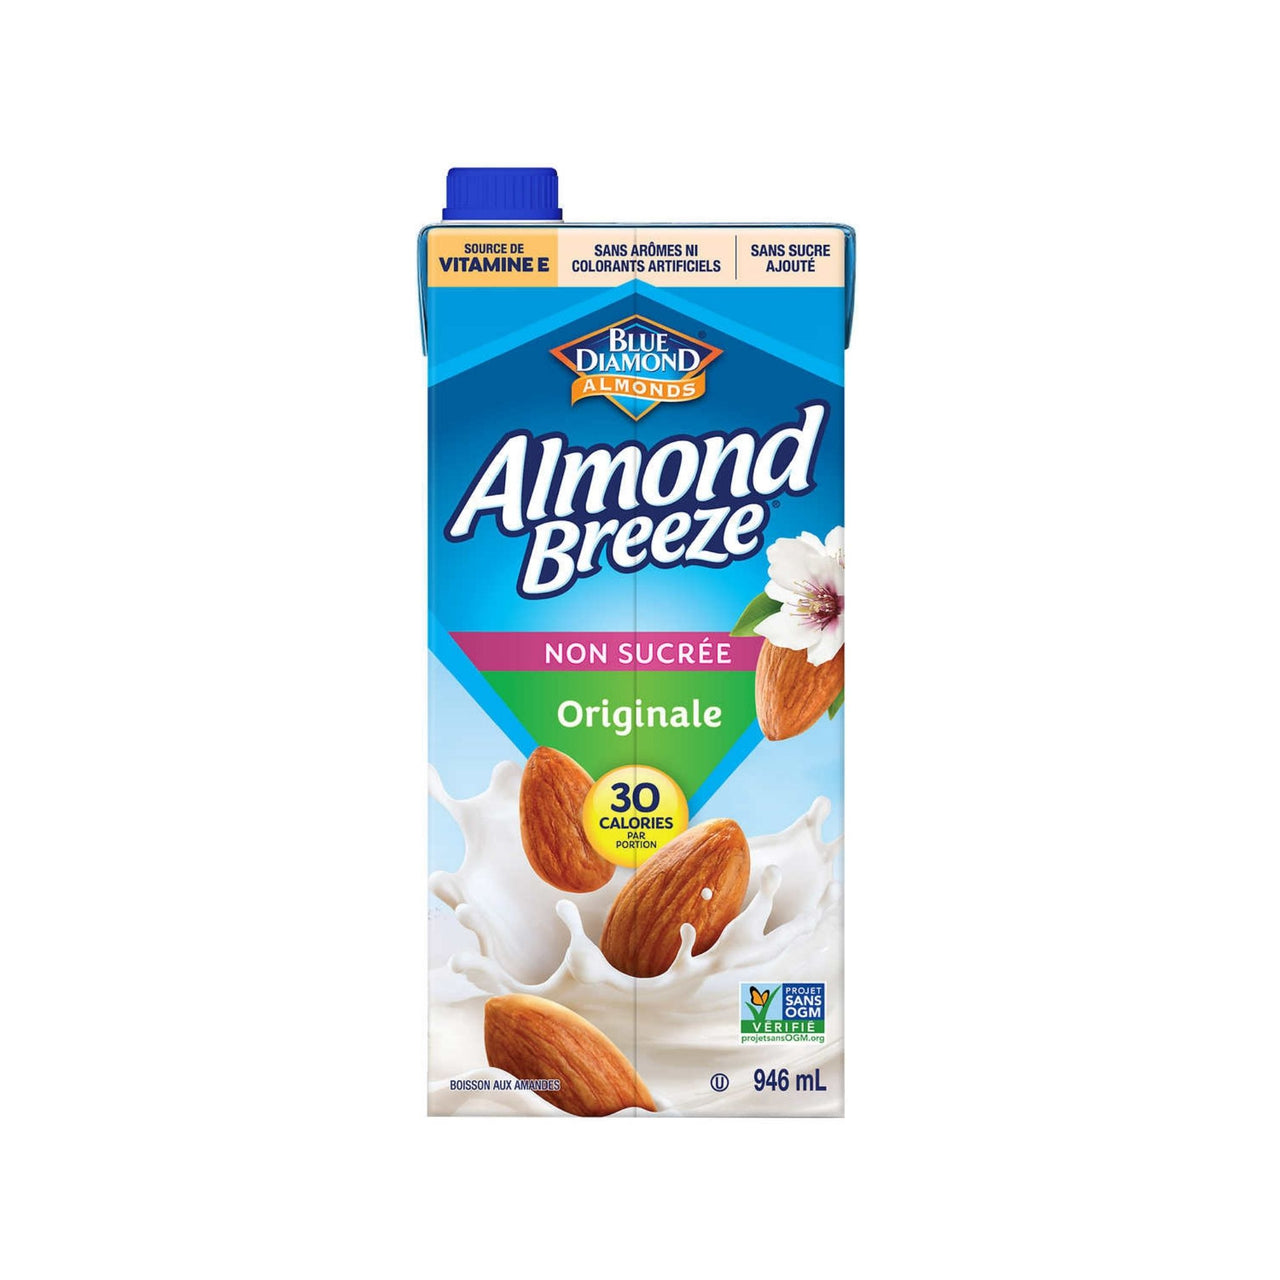 Image of Almond Breeze Unsweetened Original Almond Milk - 6 x 946 Grams